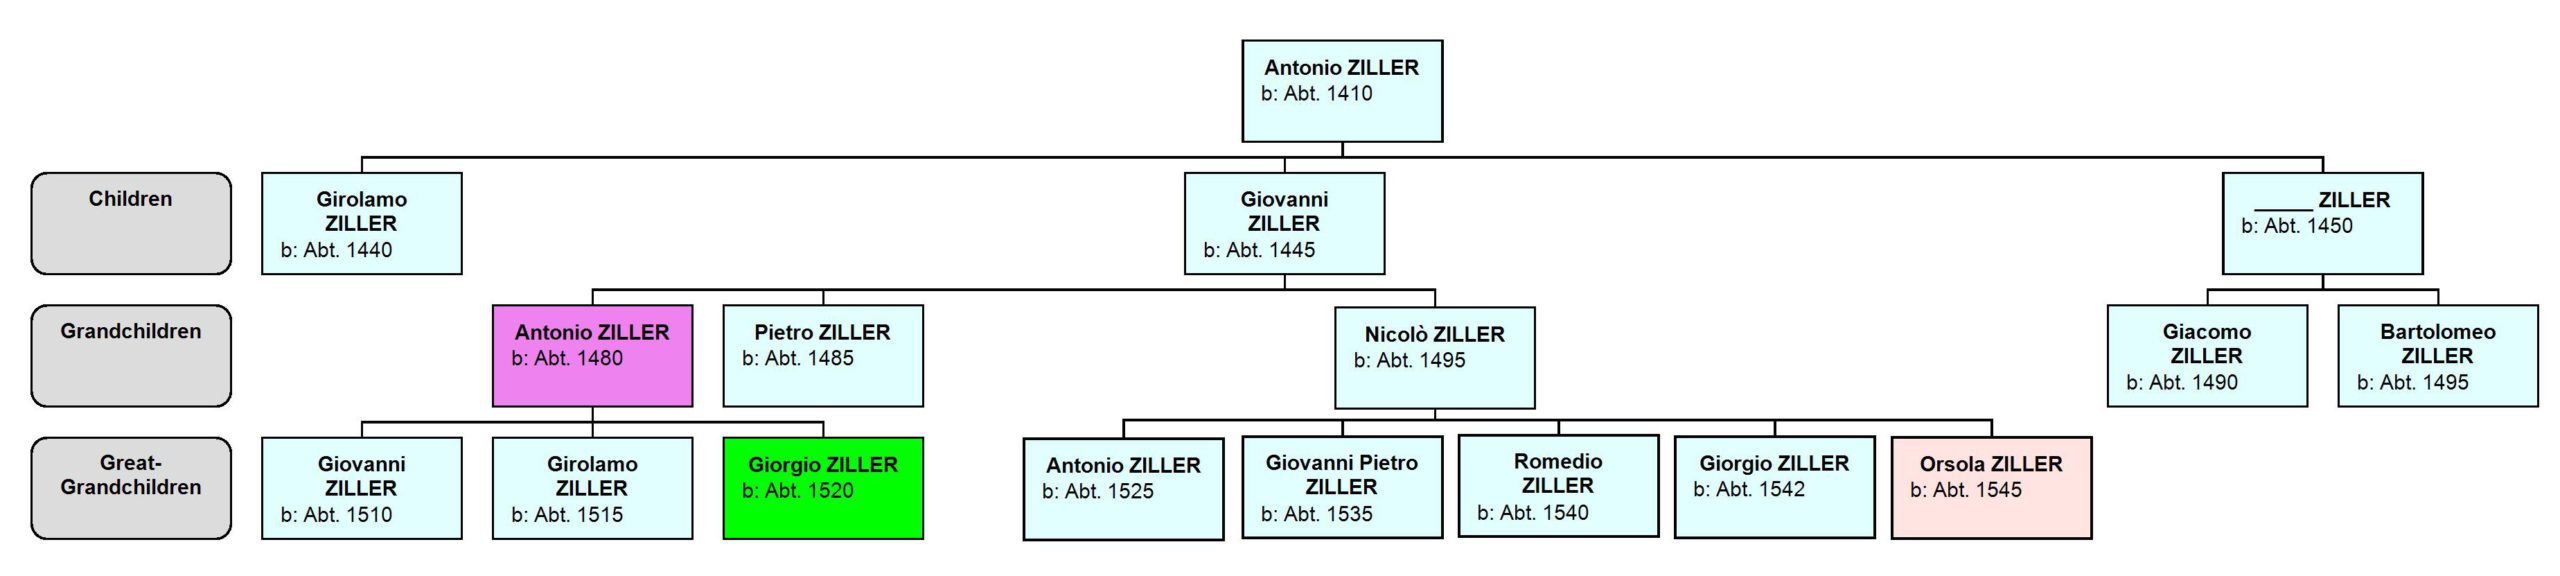 Descendant chart (3 generations) of Antonio Ziller, notary of Seio.